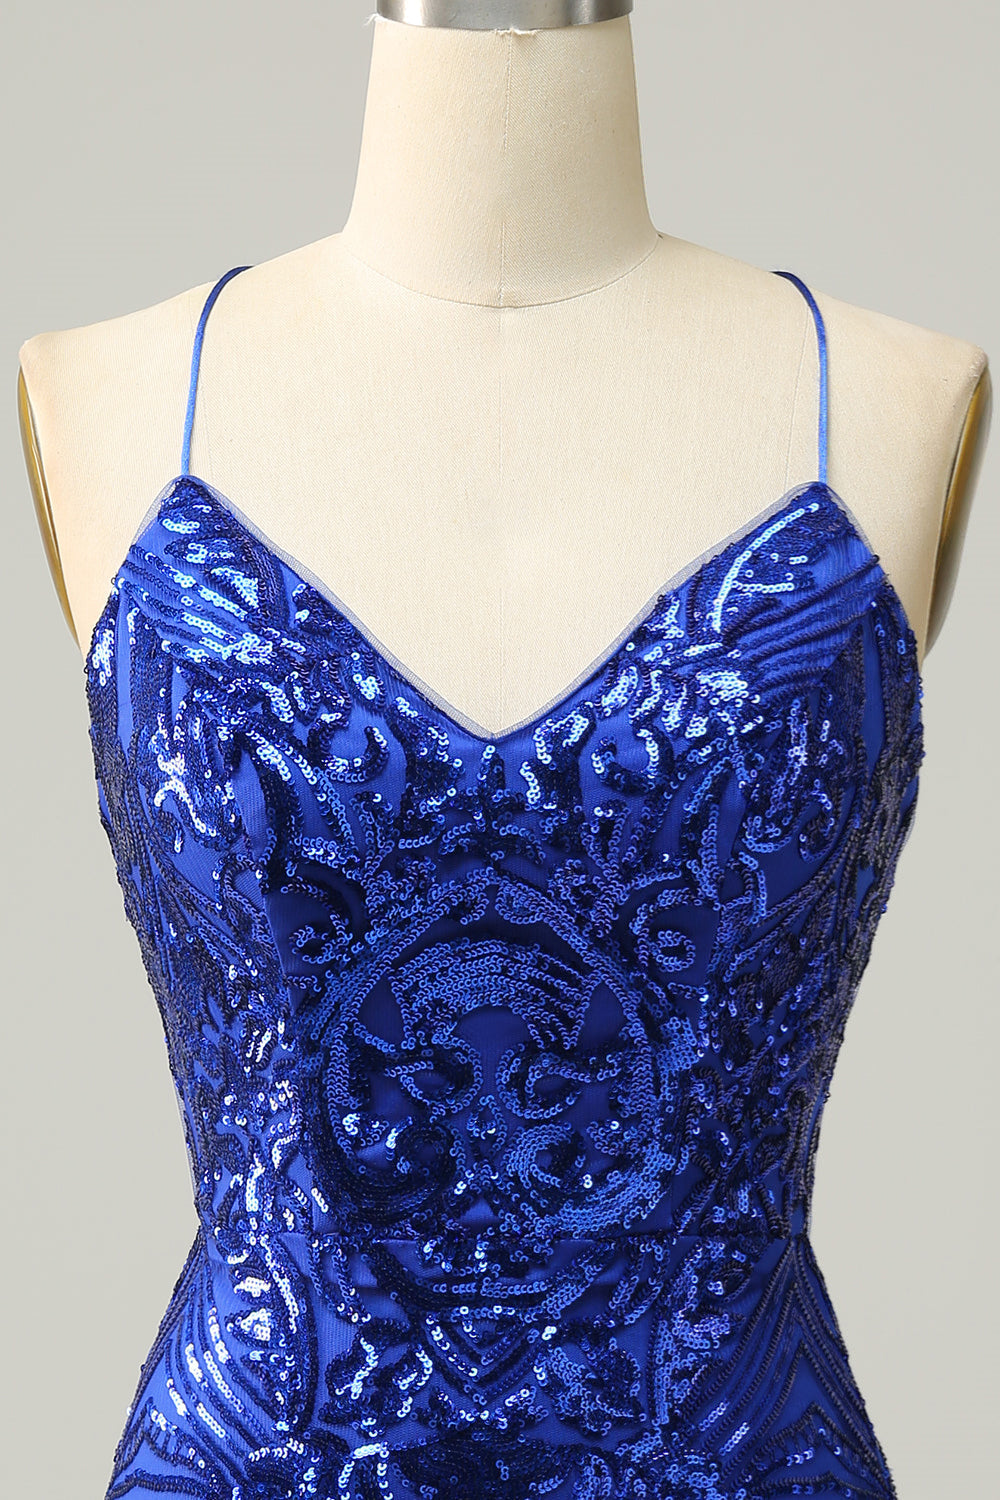 Dress Short, Royal Blue Sheath Lace-Up V Neck Sequins Homecoming Dress